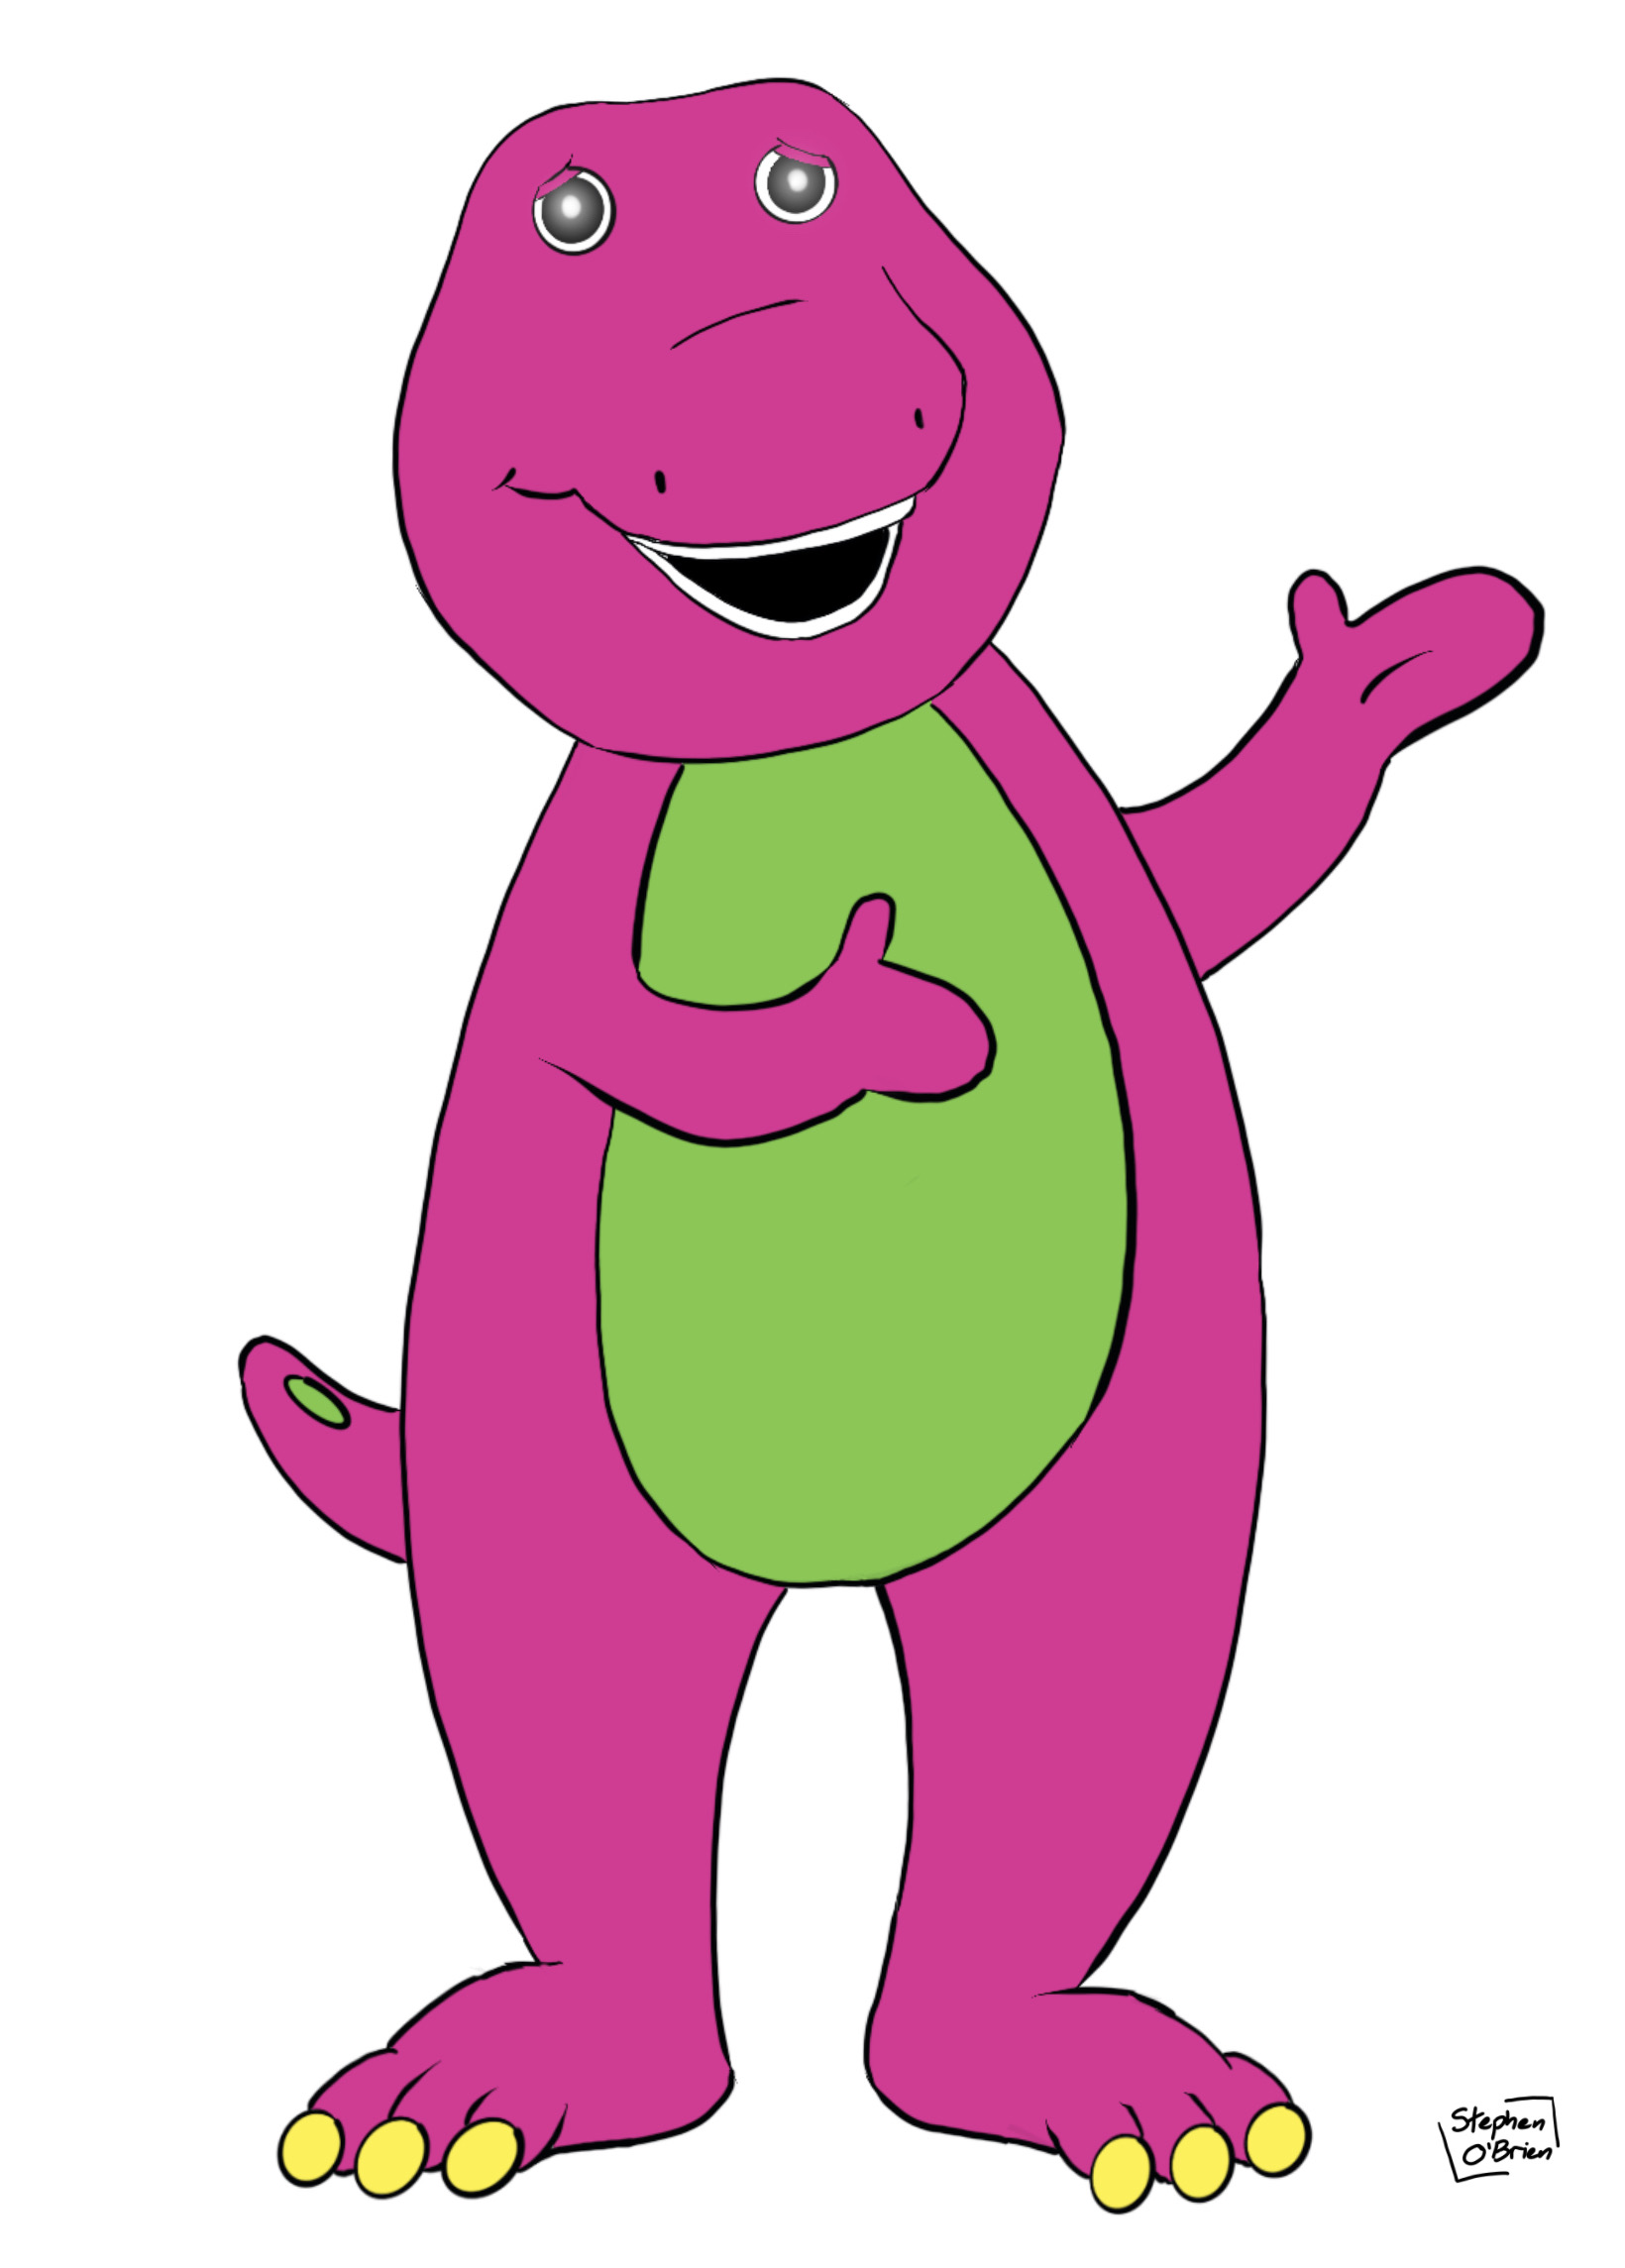 Barney the Dinosaur. by BaileyDowns on DeviantArt